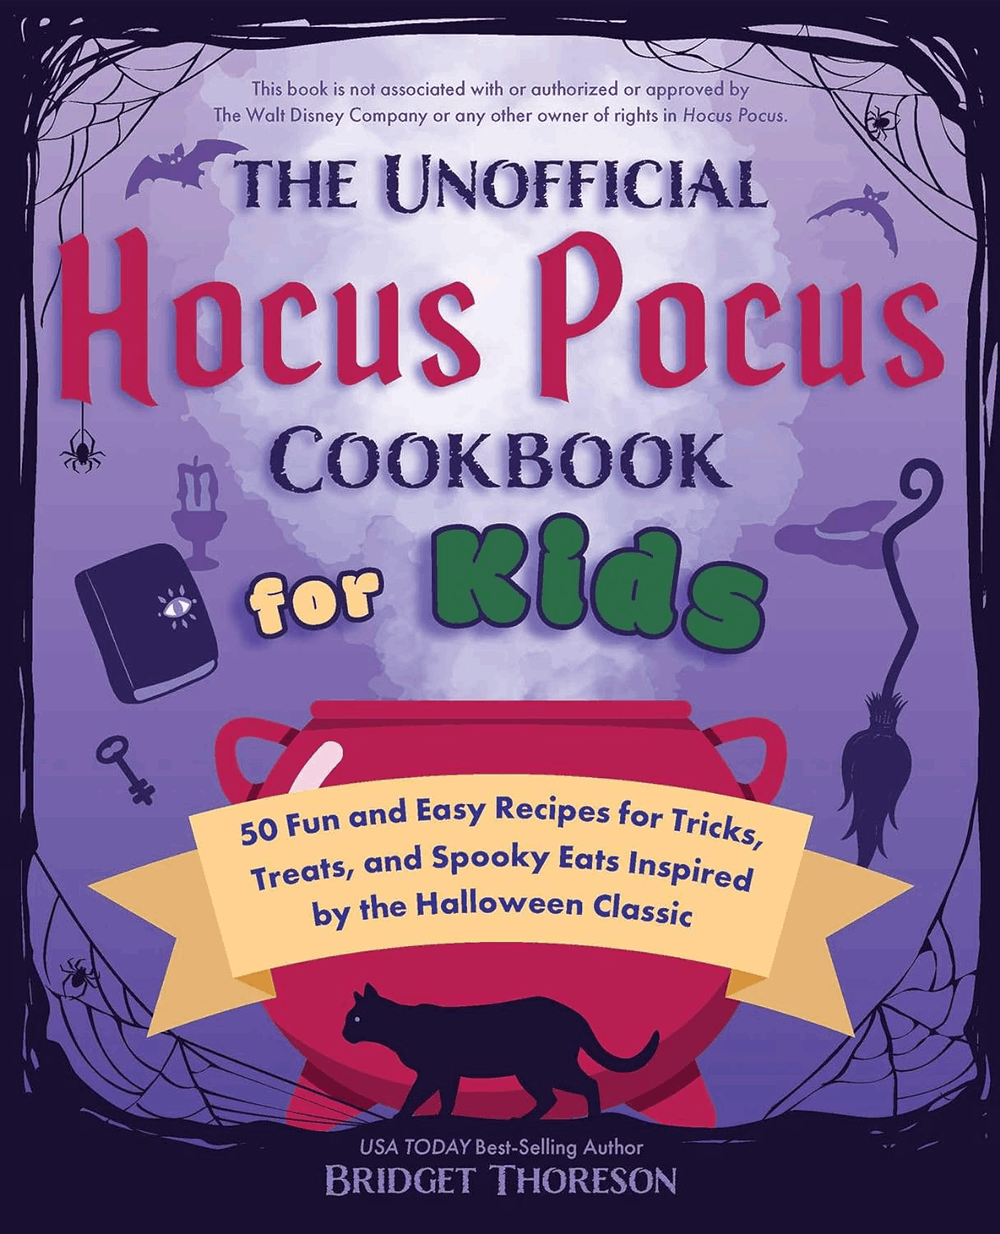 The Unofficial Hocus Pocus Cookbook for Kids